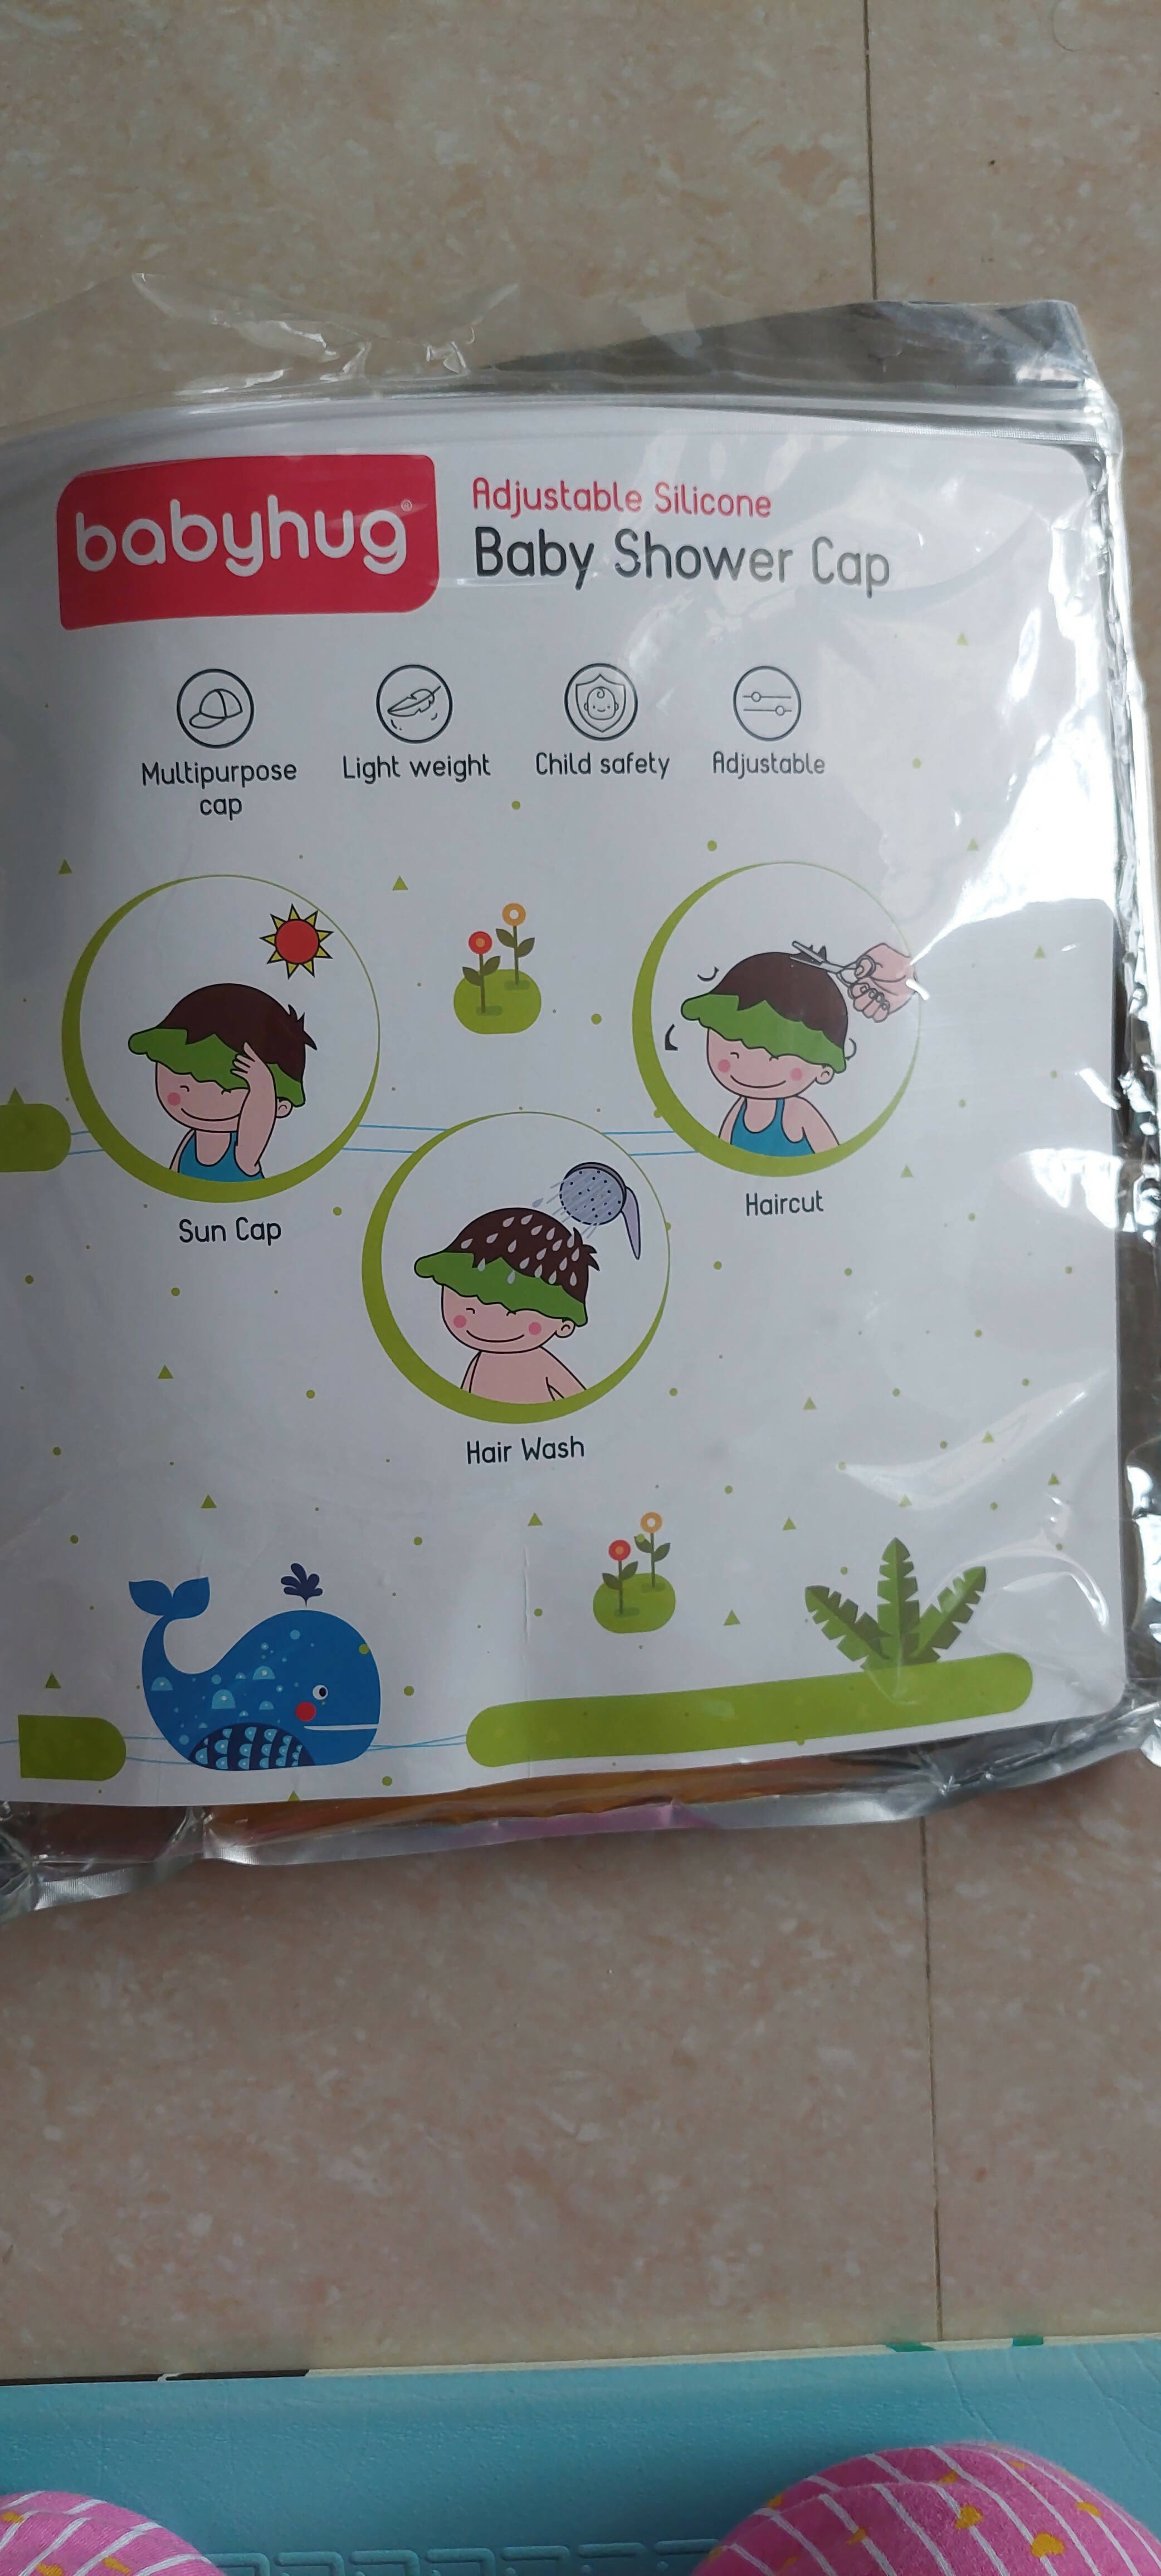 Babthug Adjustable Silicone Baby Shower Cap